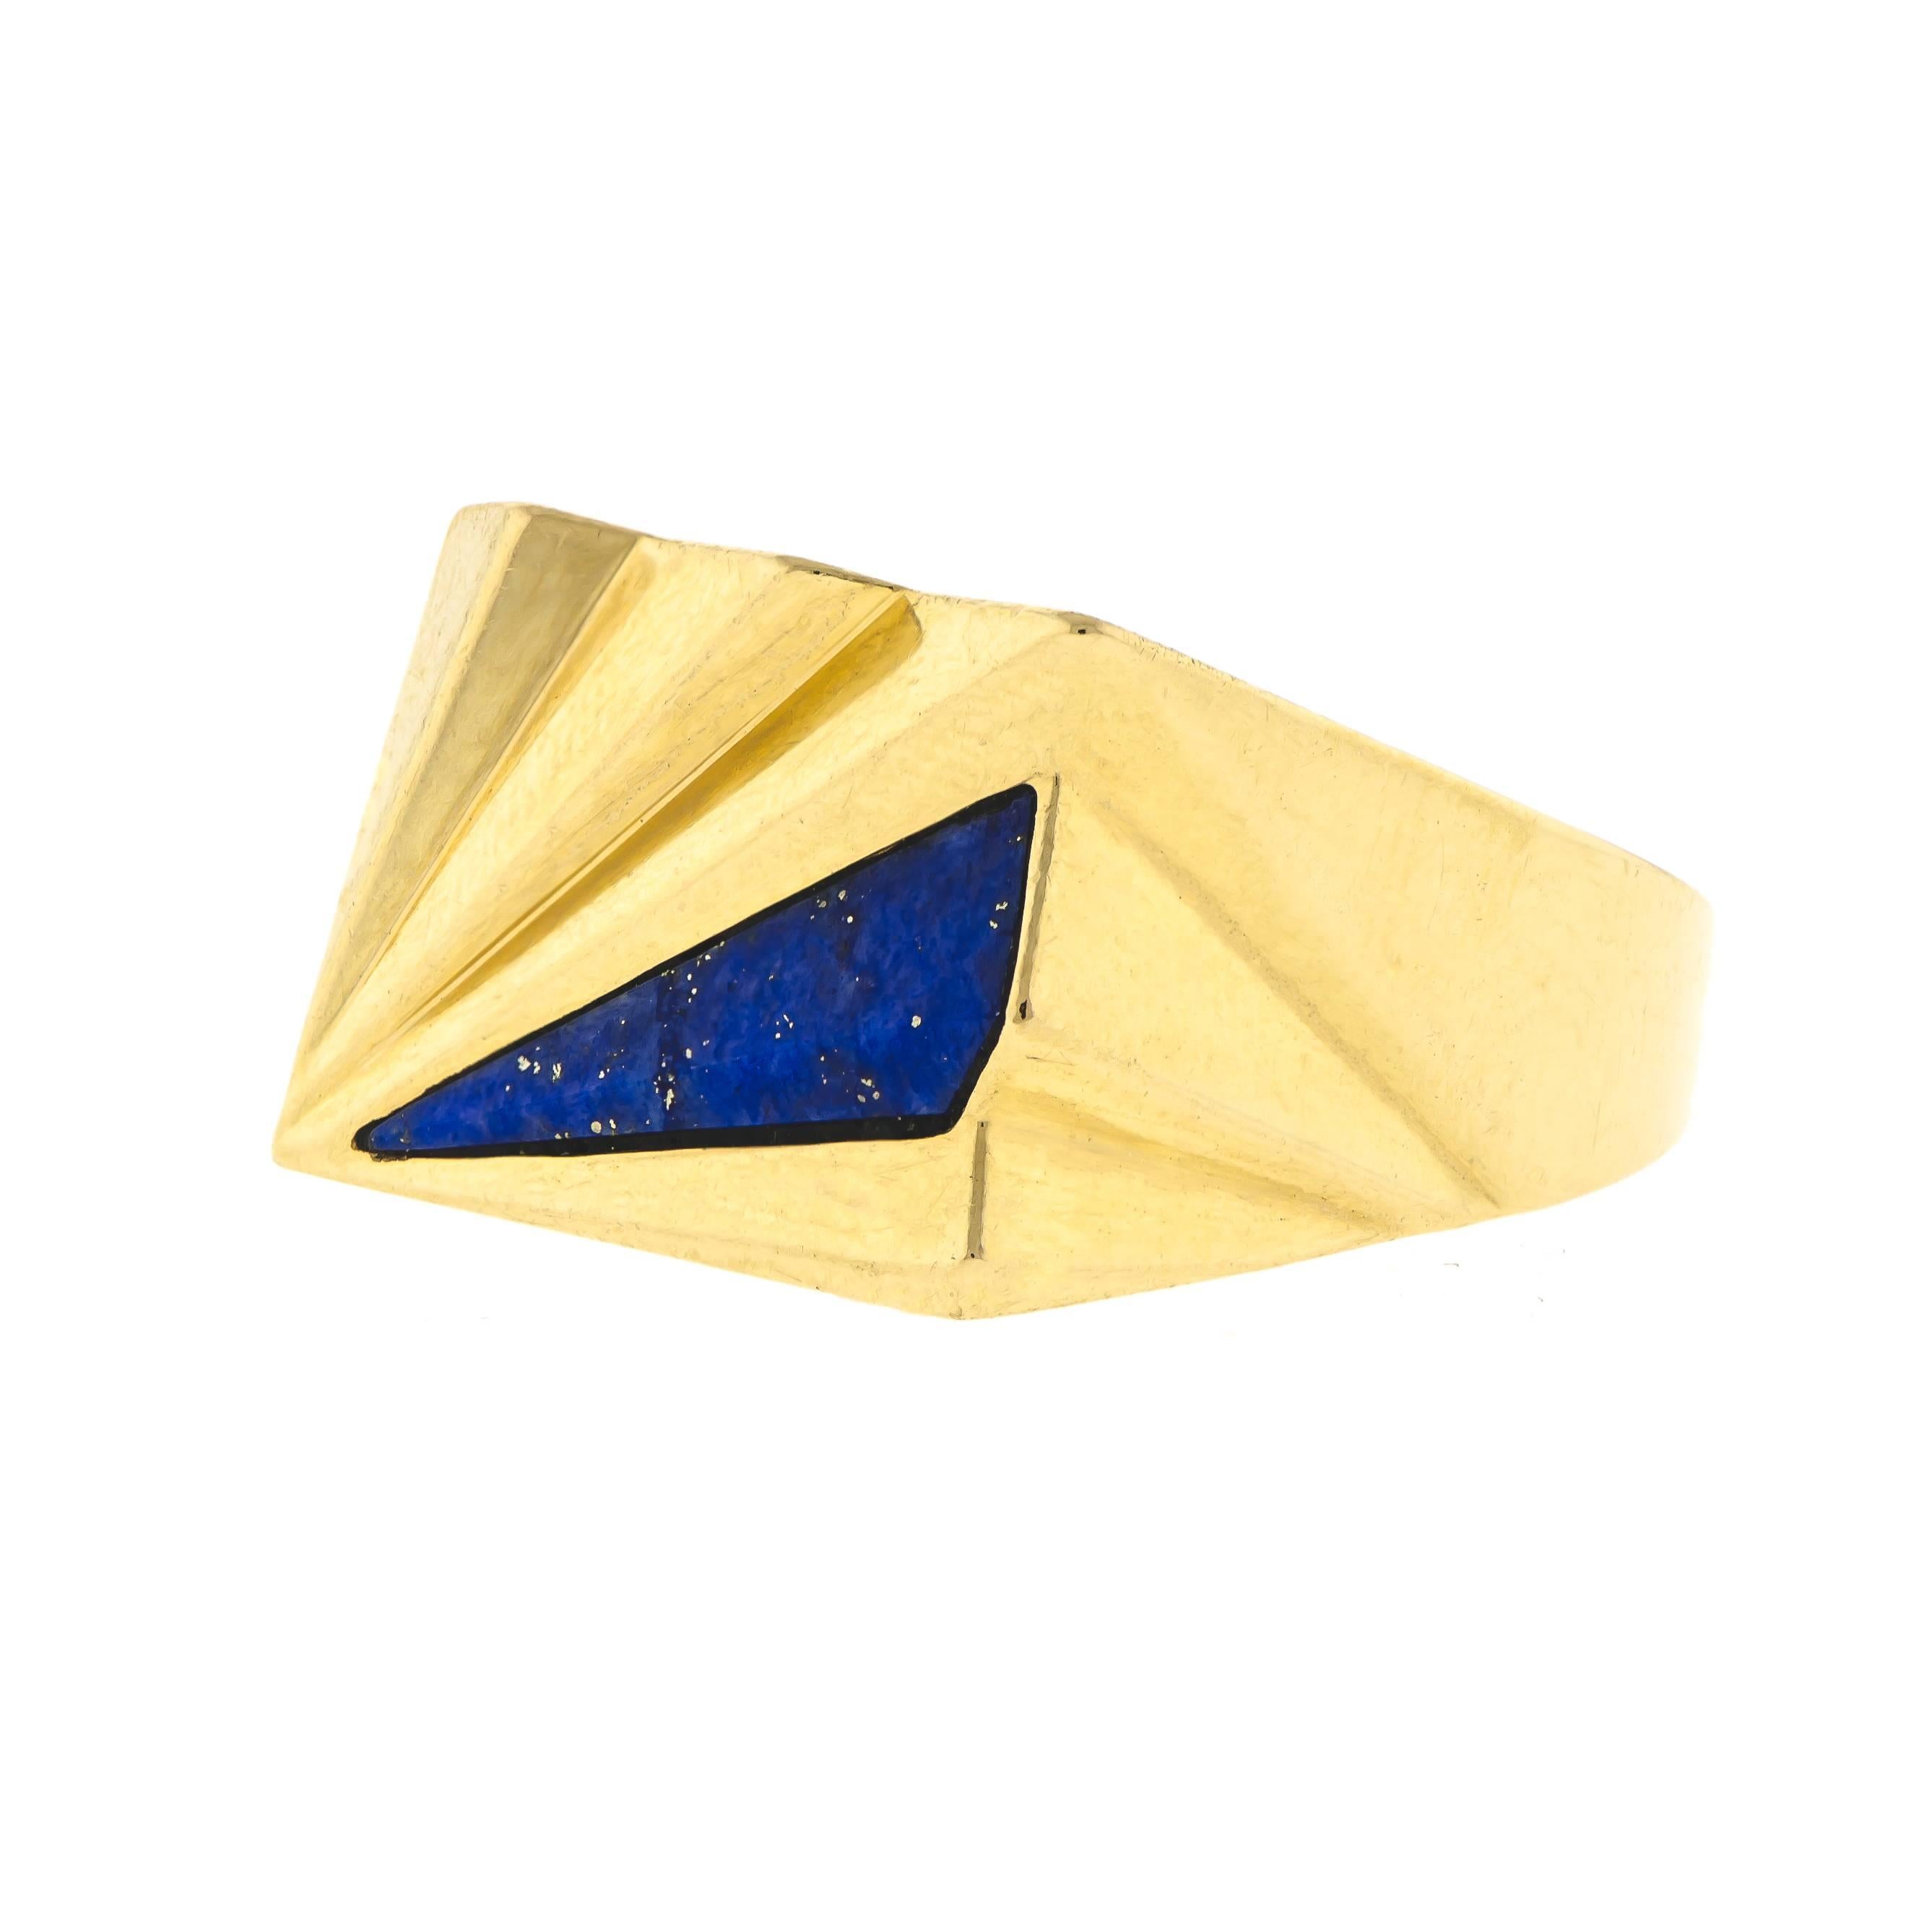 Attractive lapis lazuli 14k yellow gold ring by Erte, beveled design radiating outwards set with one custom fancy cut lapis lazuli stone - Quality and Maker's Mark - CFA Erte 14K 11/75